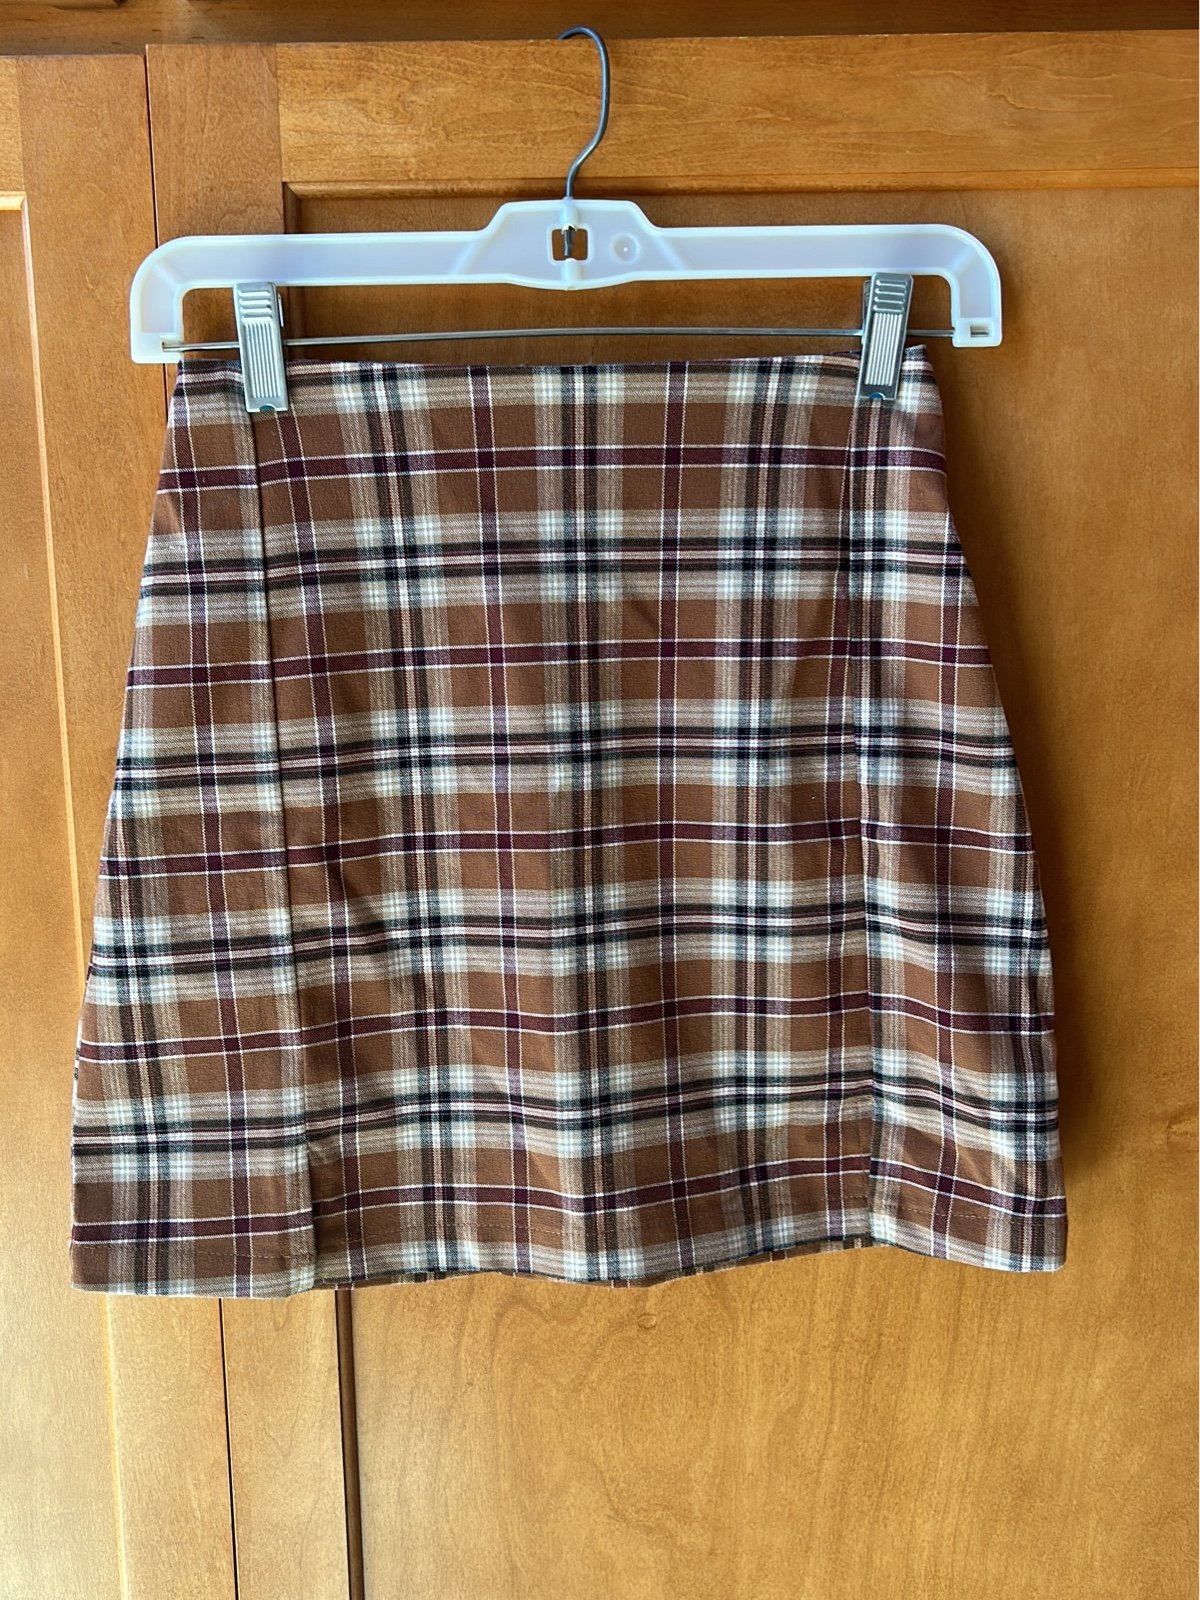 reasonable price J Galt Plaid Skirt - Size Small i0oZb7